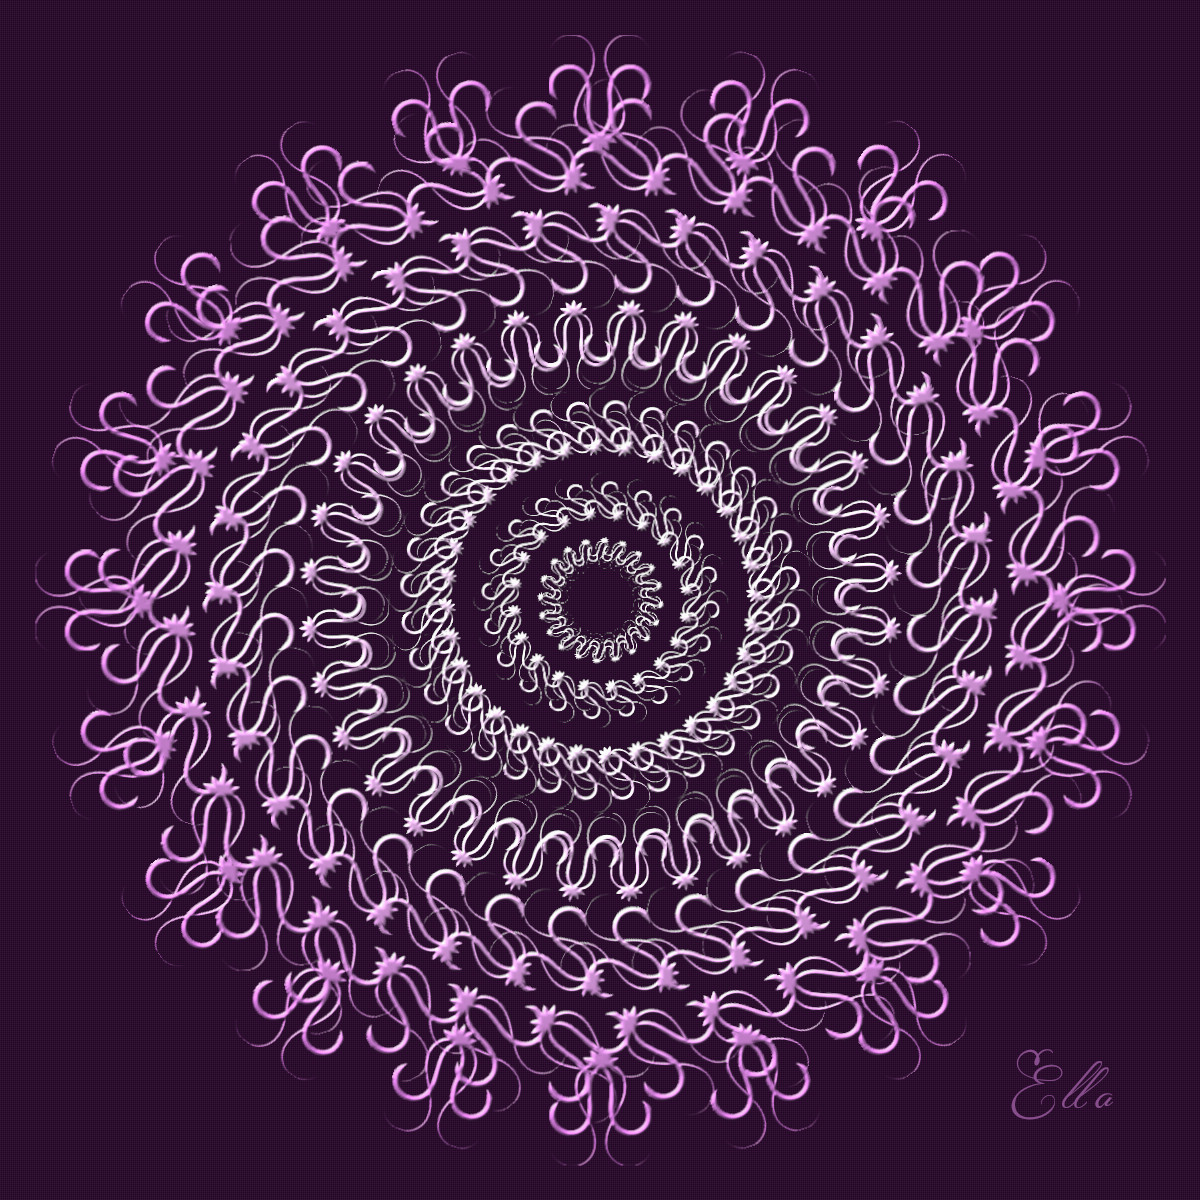 Mandala from brush.jpg